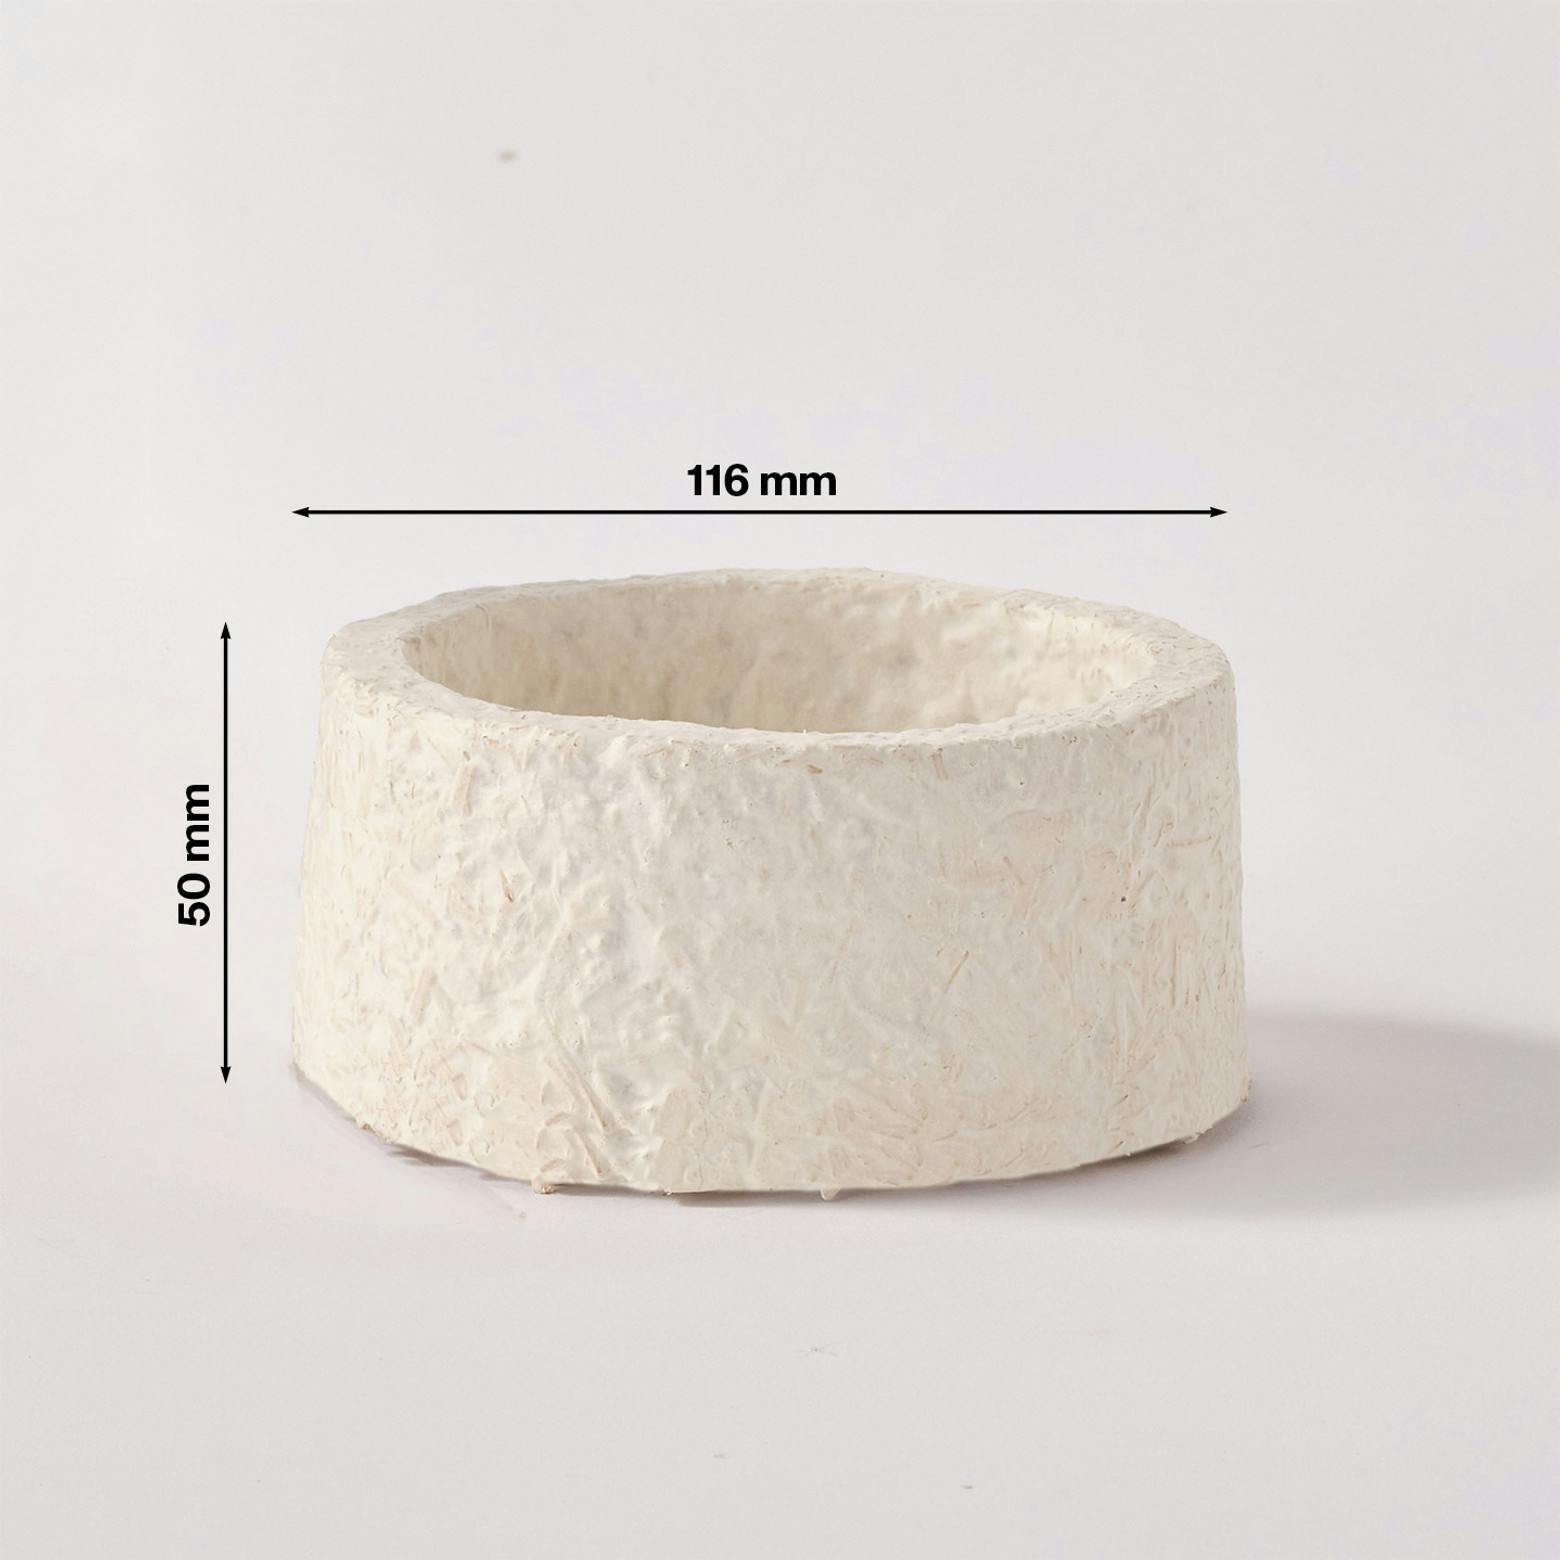 dimensions of mushroom packaging medium candle holder